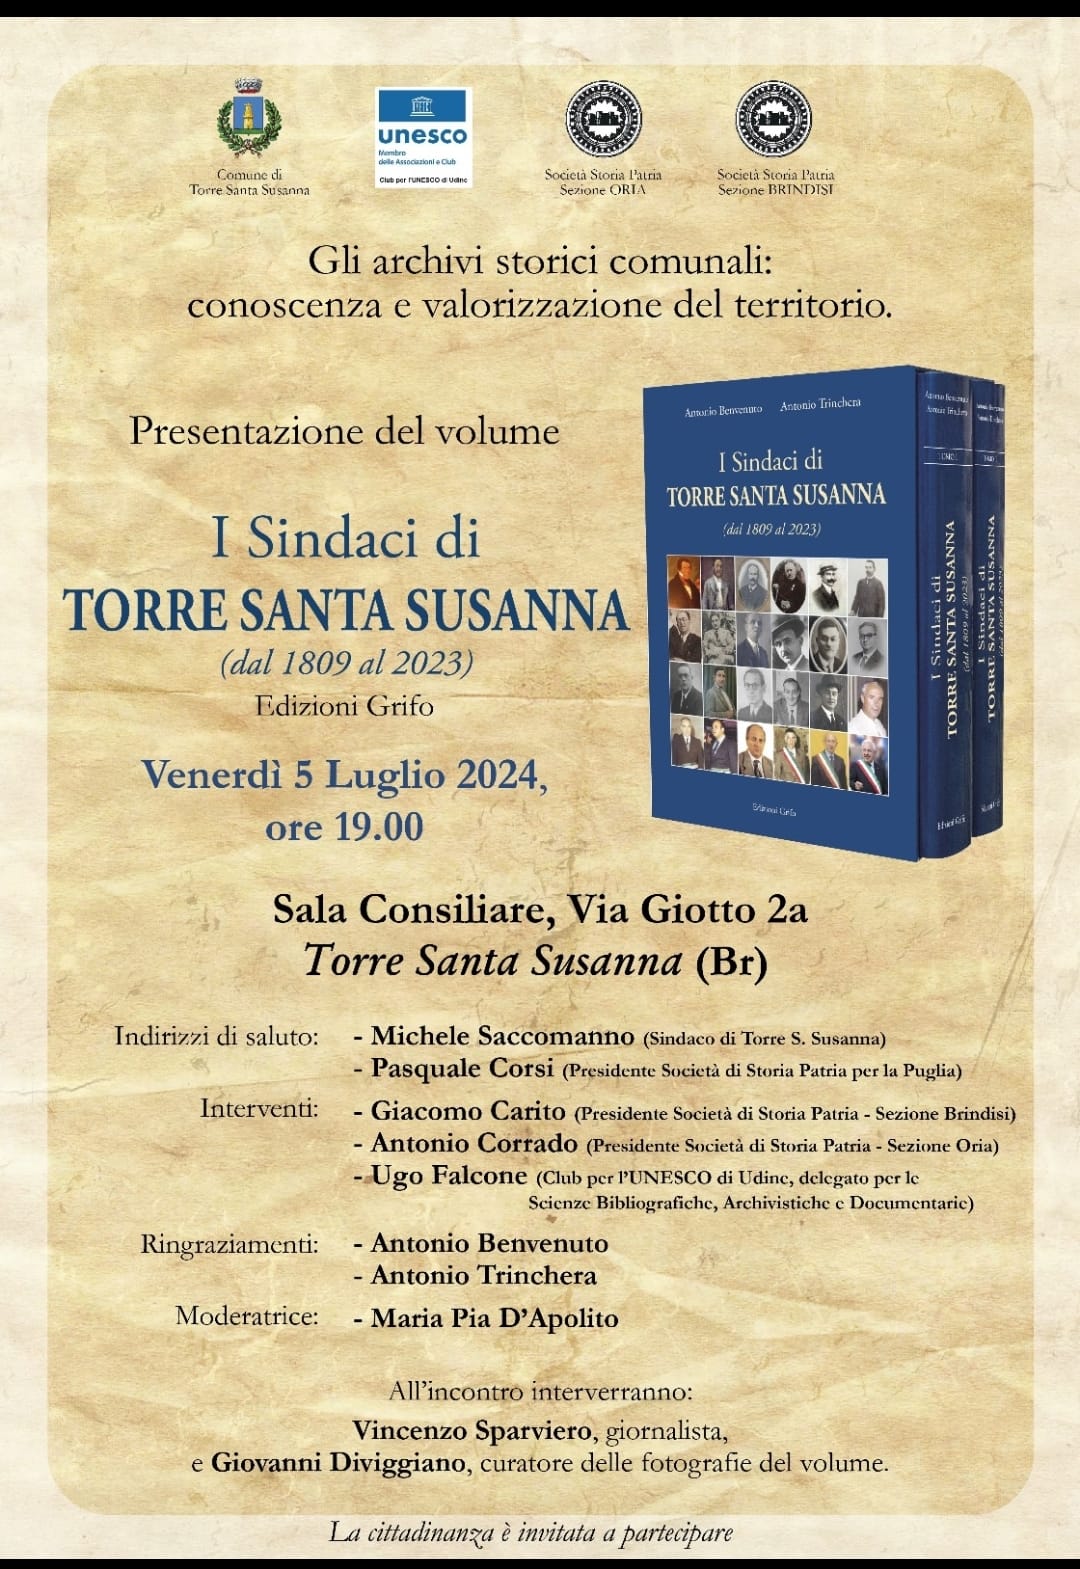 Torre S. Susanna: Presentazione libro "I Sindaci di Torre S. Susanna dal 1809 al 2023"